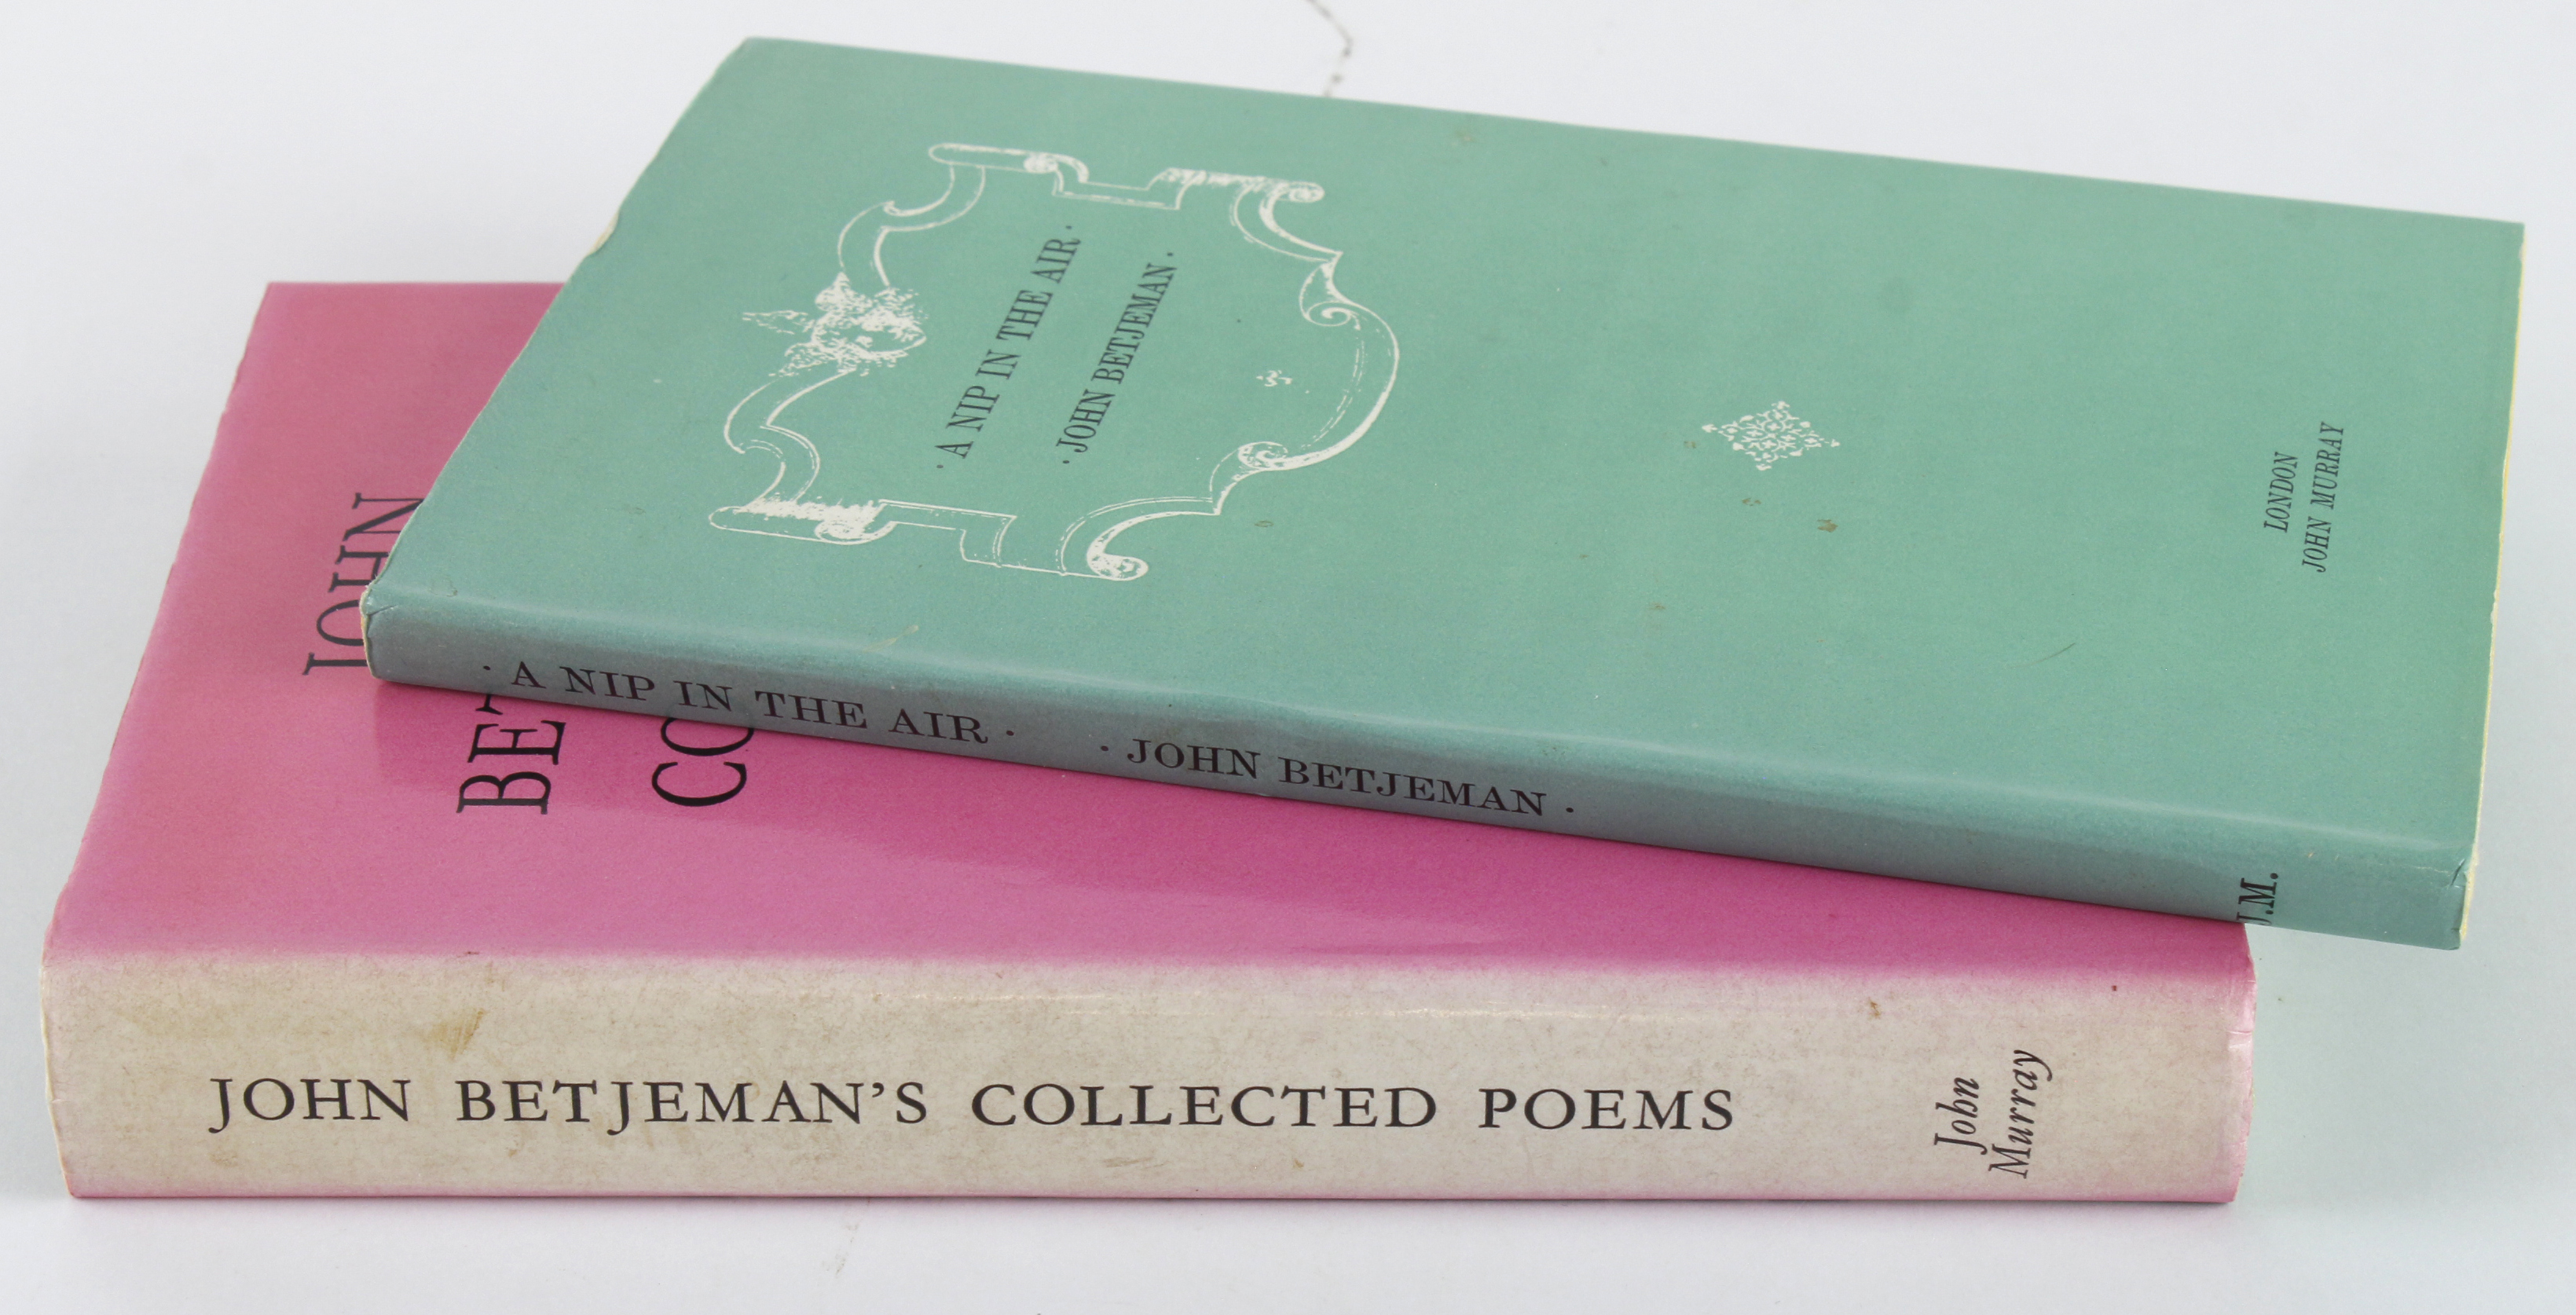 Betjeman (John). Two works signed by John Betjeman, comprising, A Nip in the Air, reprint 1974; John